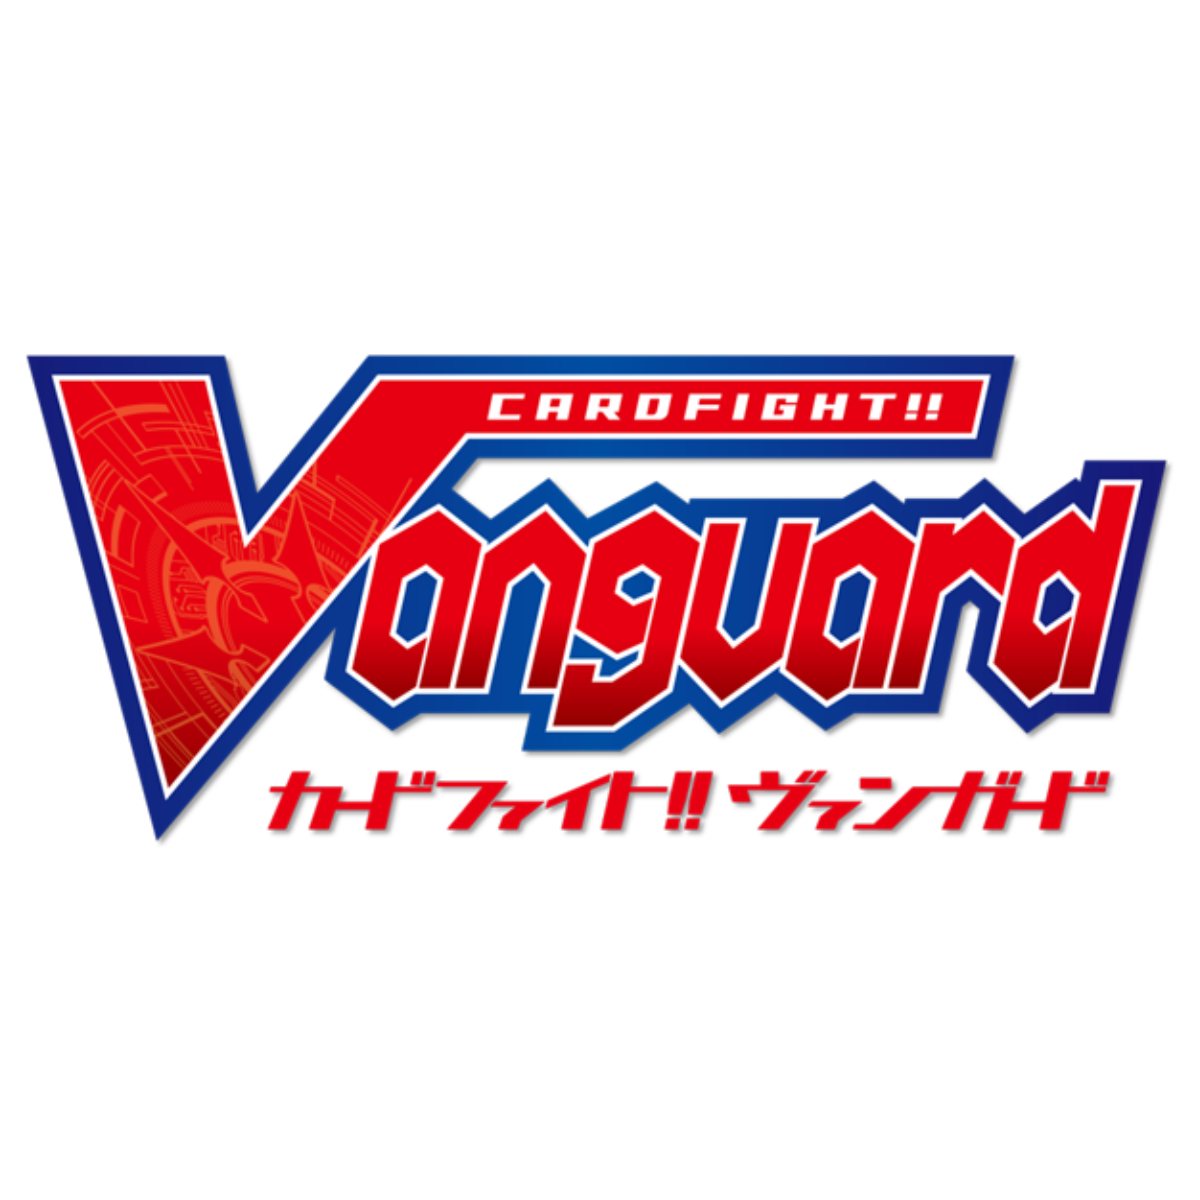 Bushiroad Deck Holder Collection -Card Fight!! Vanguard- "Make-A-Wish!! Kyoka" (Vol.818)-Bushiroad-Ace Cards & Collectibles